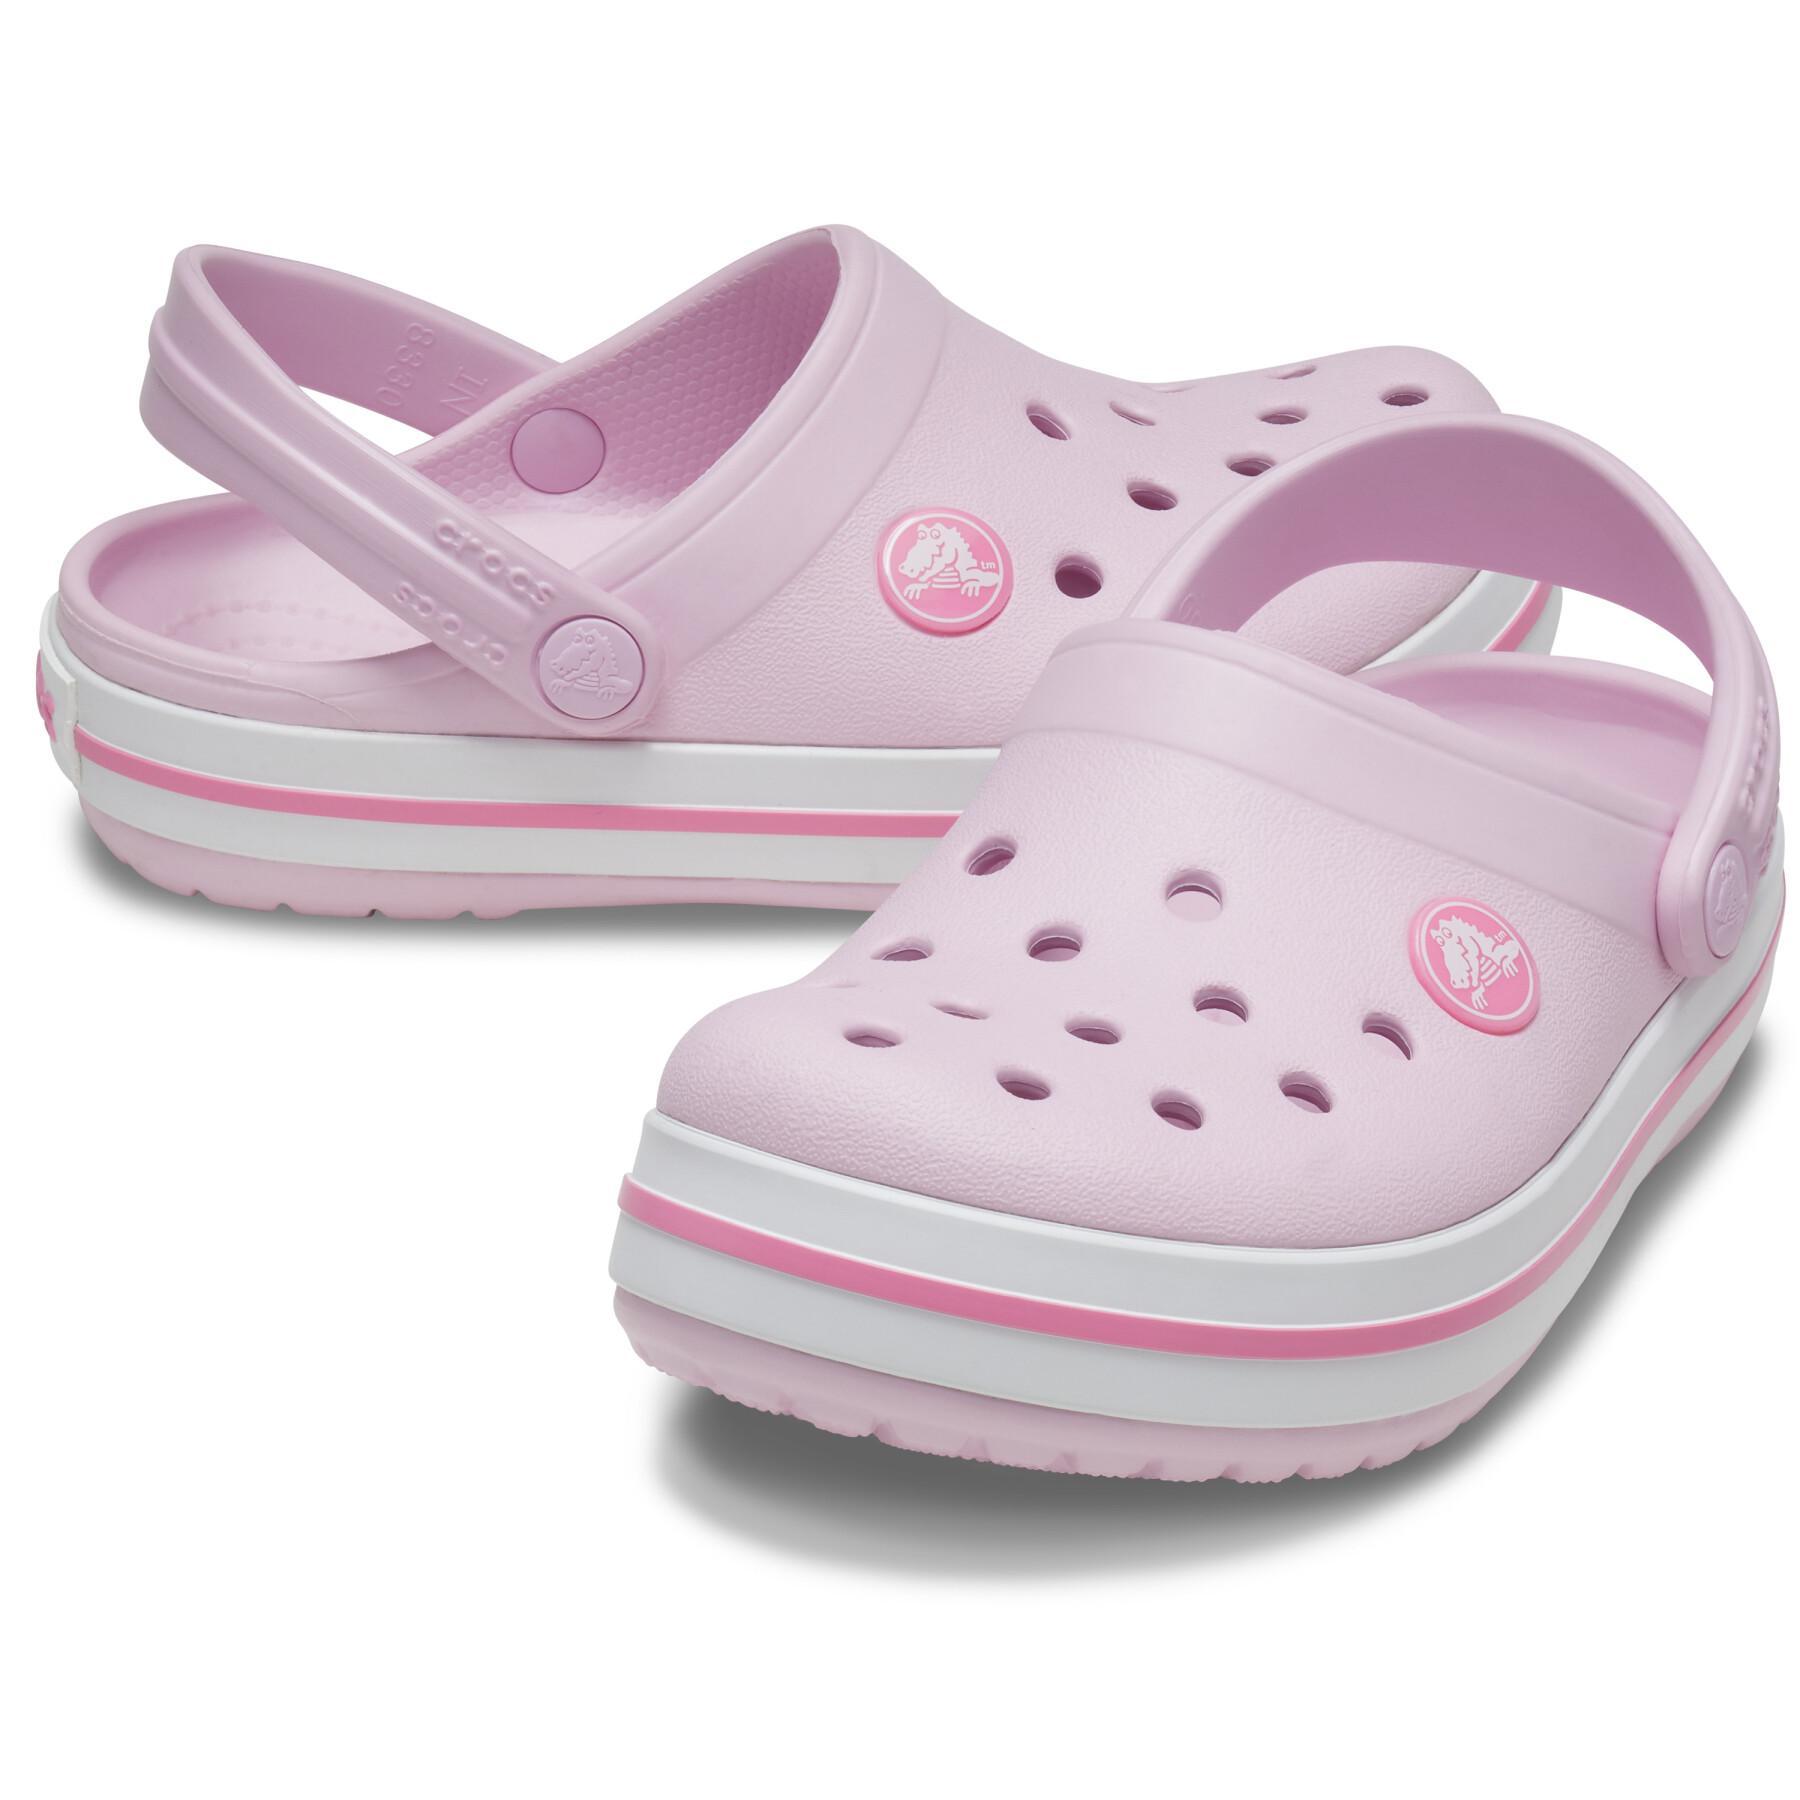 Baby clogs Crocs Crocband T